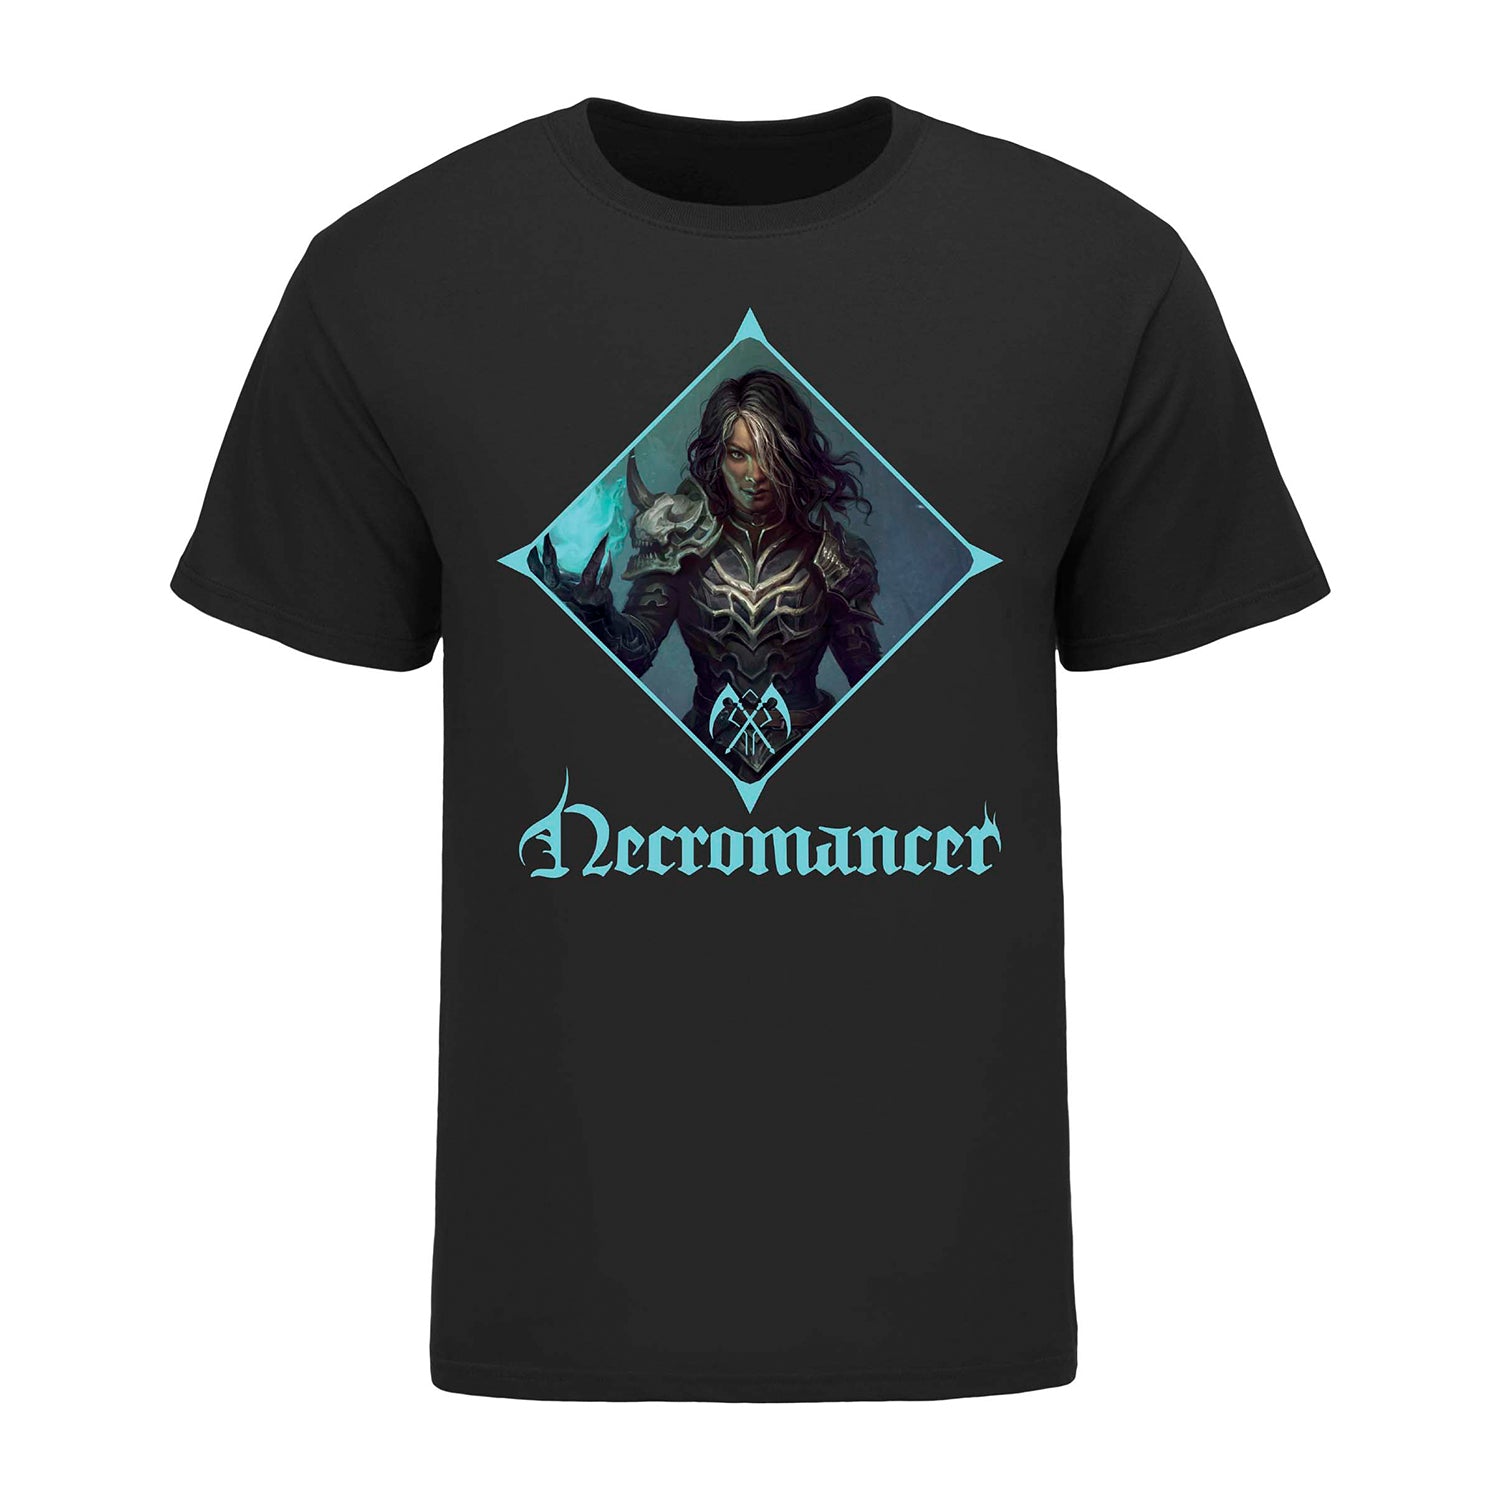 Diablo Immortal Necromancer Urban Edge Black T-Shirt - Front View